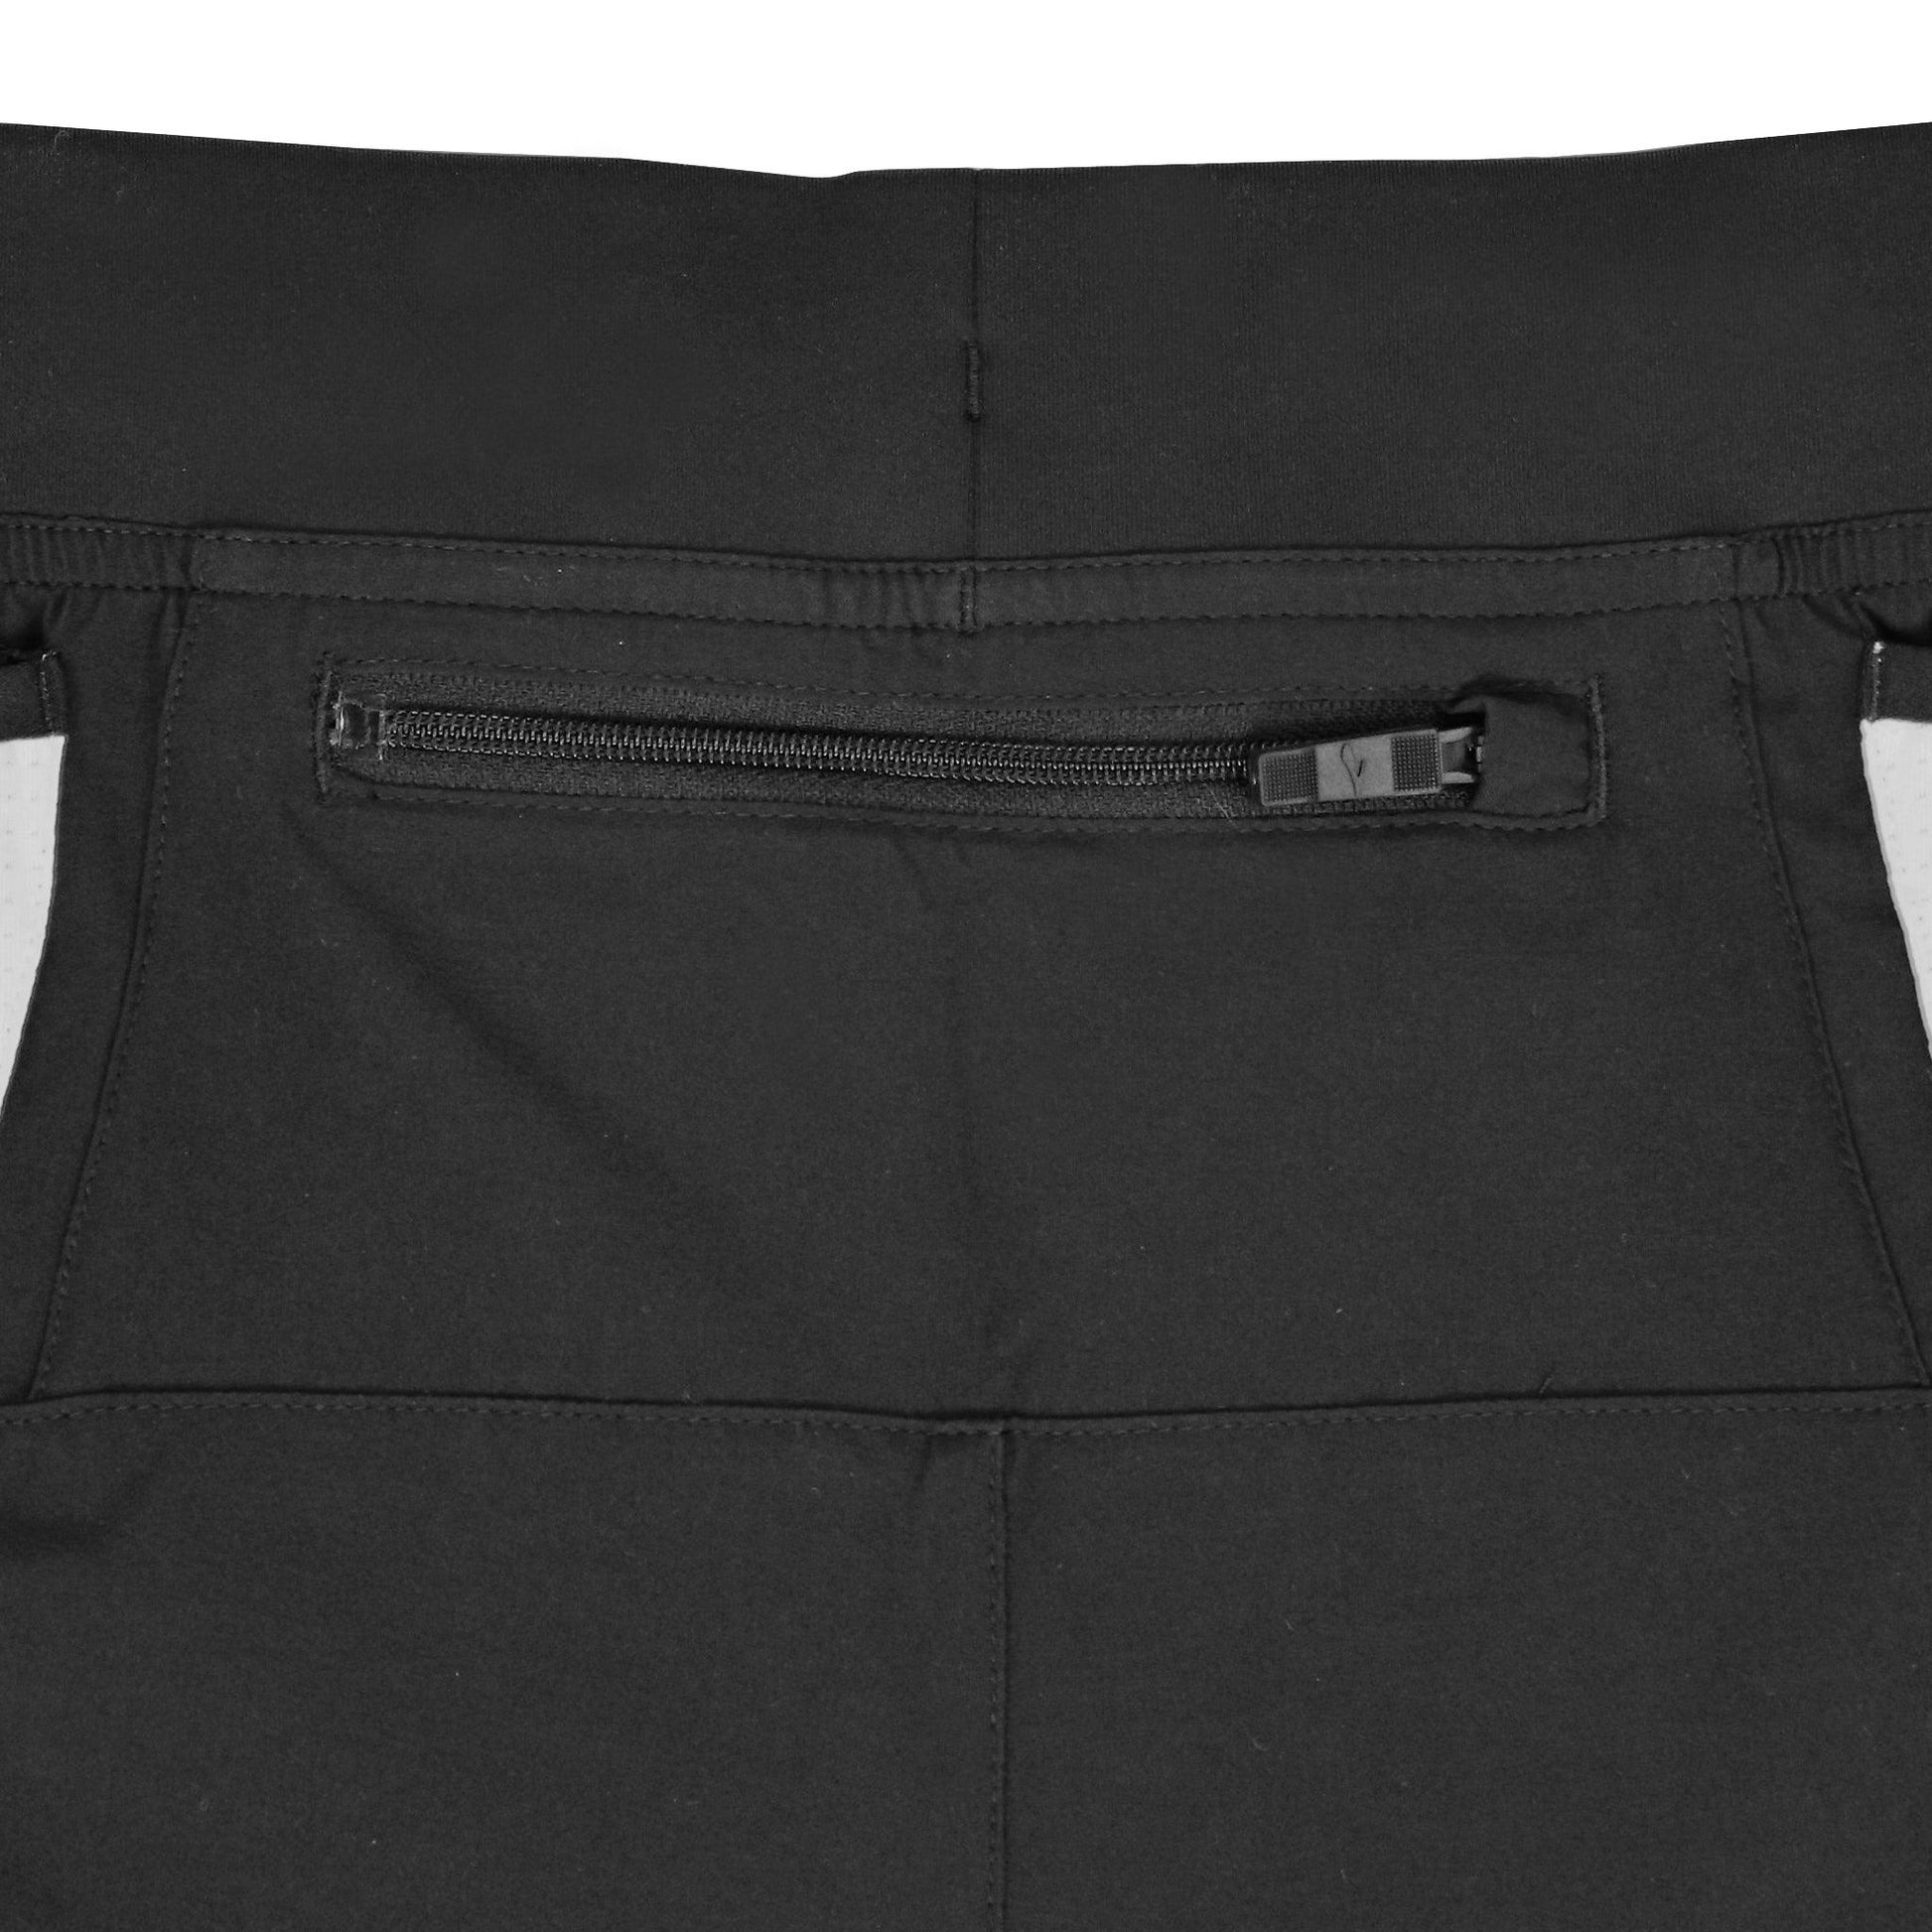 michelob-ultra-brooks-running-shorts-black-back-detail